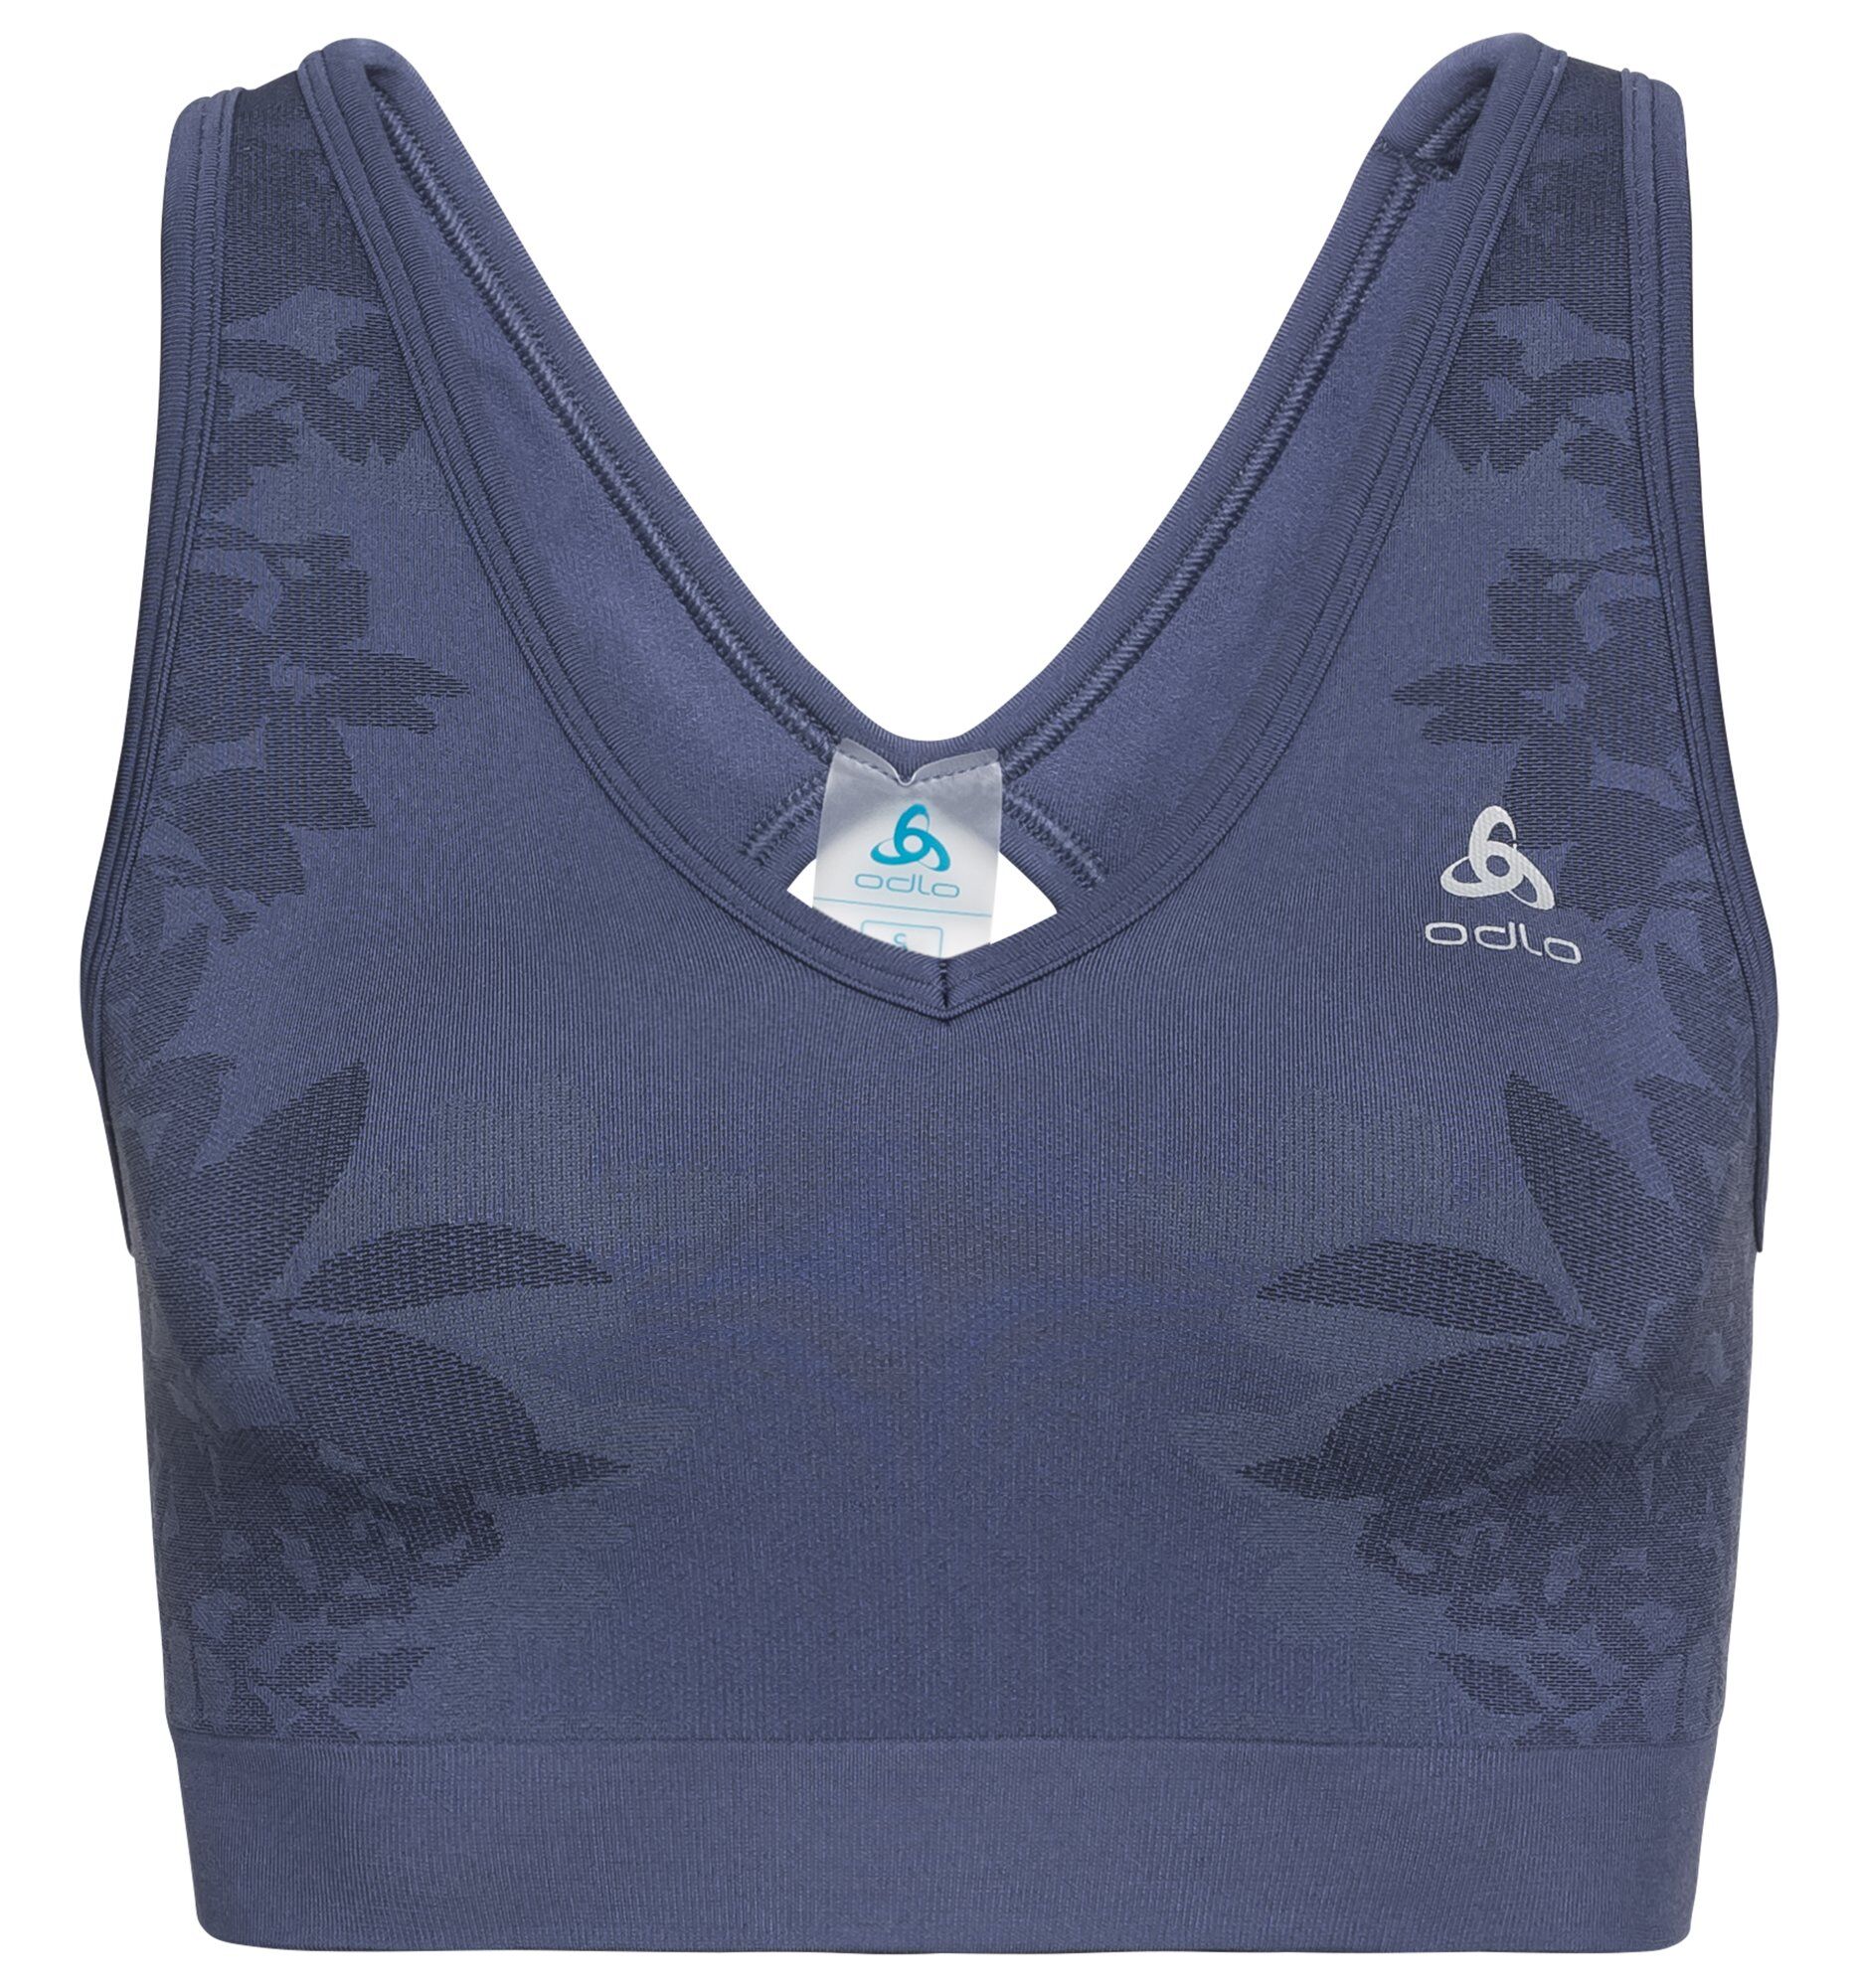 Odlo - Blackcomb Seamless Medium - Sports bra - Women's